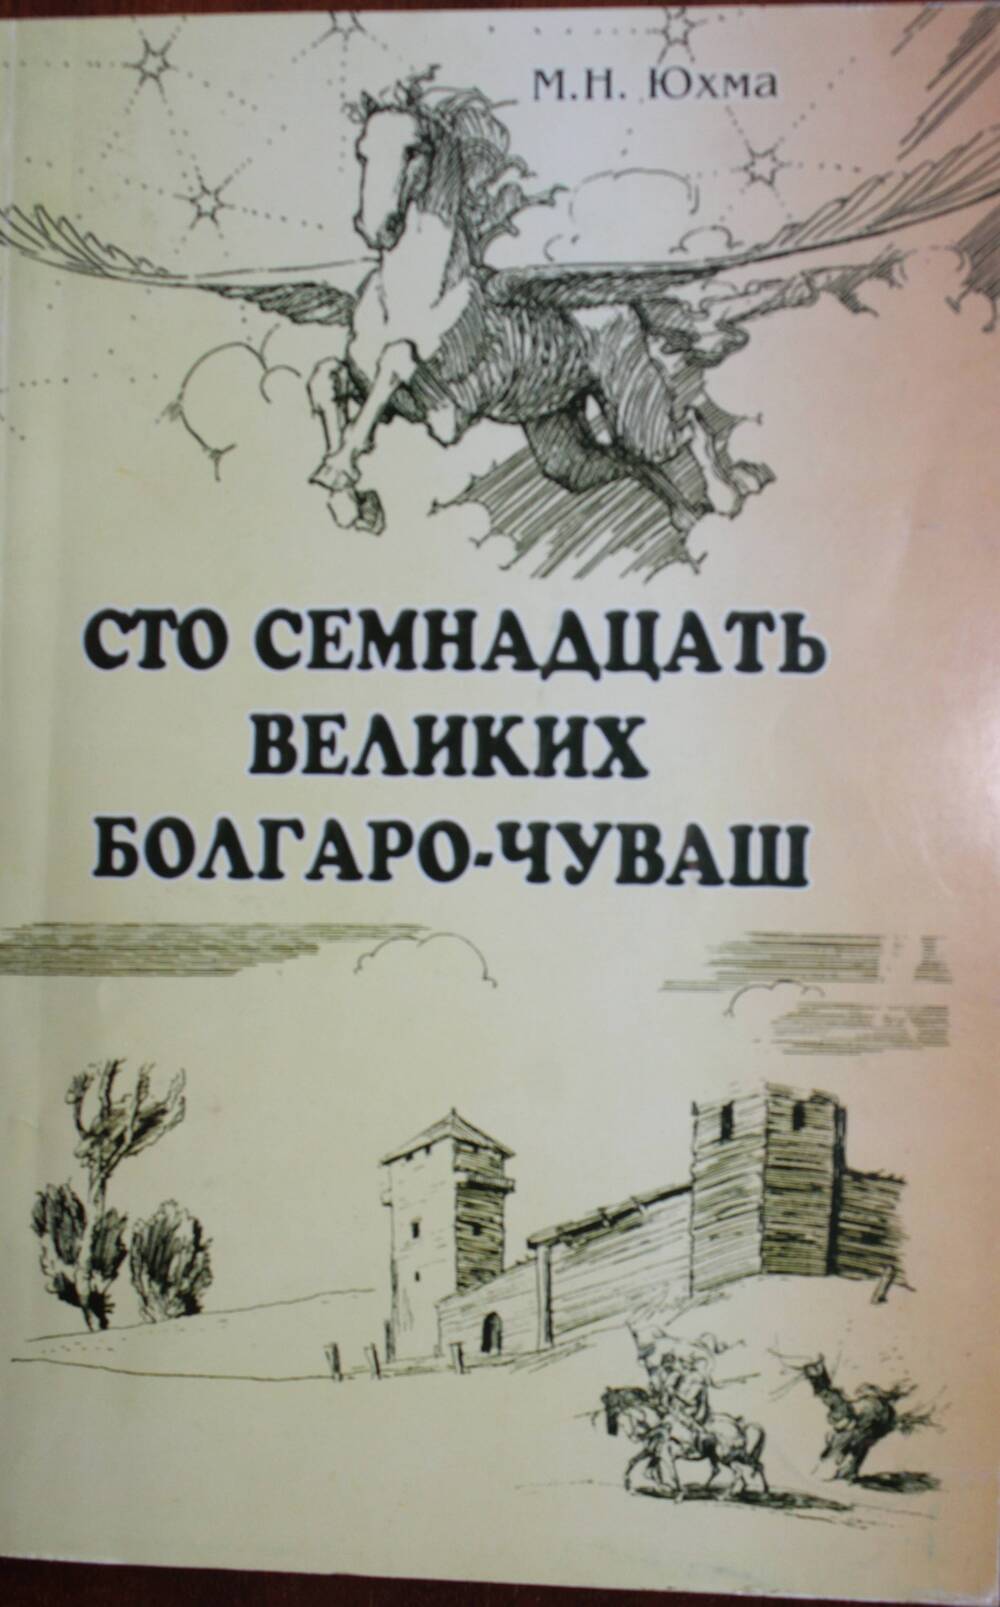 Книга М.Н.Юхма Сто семнадцать великих болгаро-чуваш, Чебоксары 2009